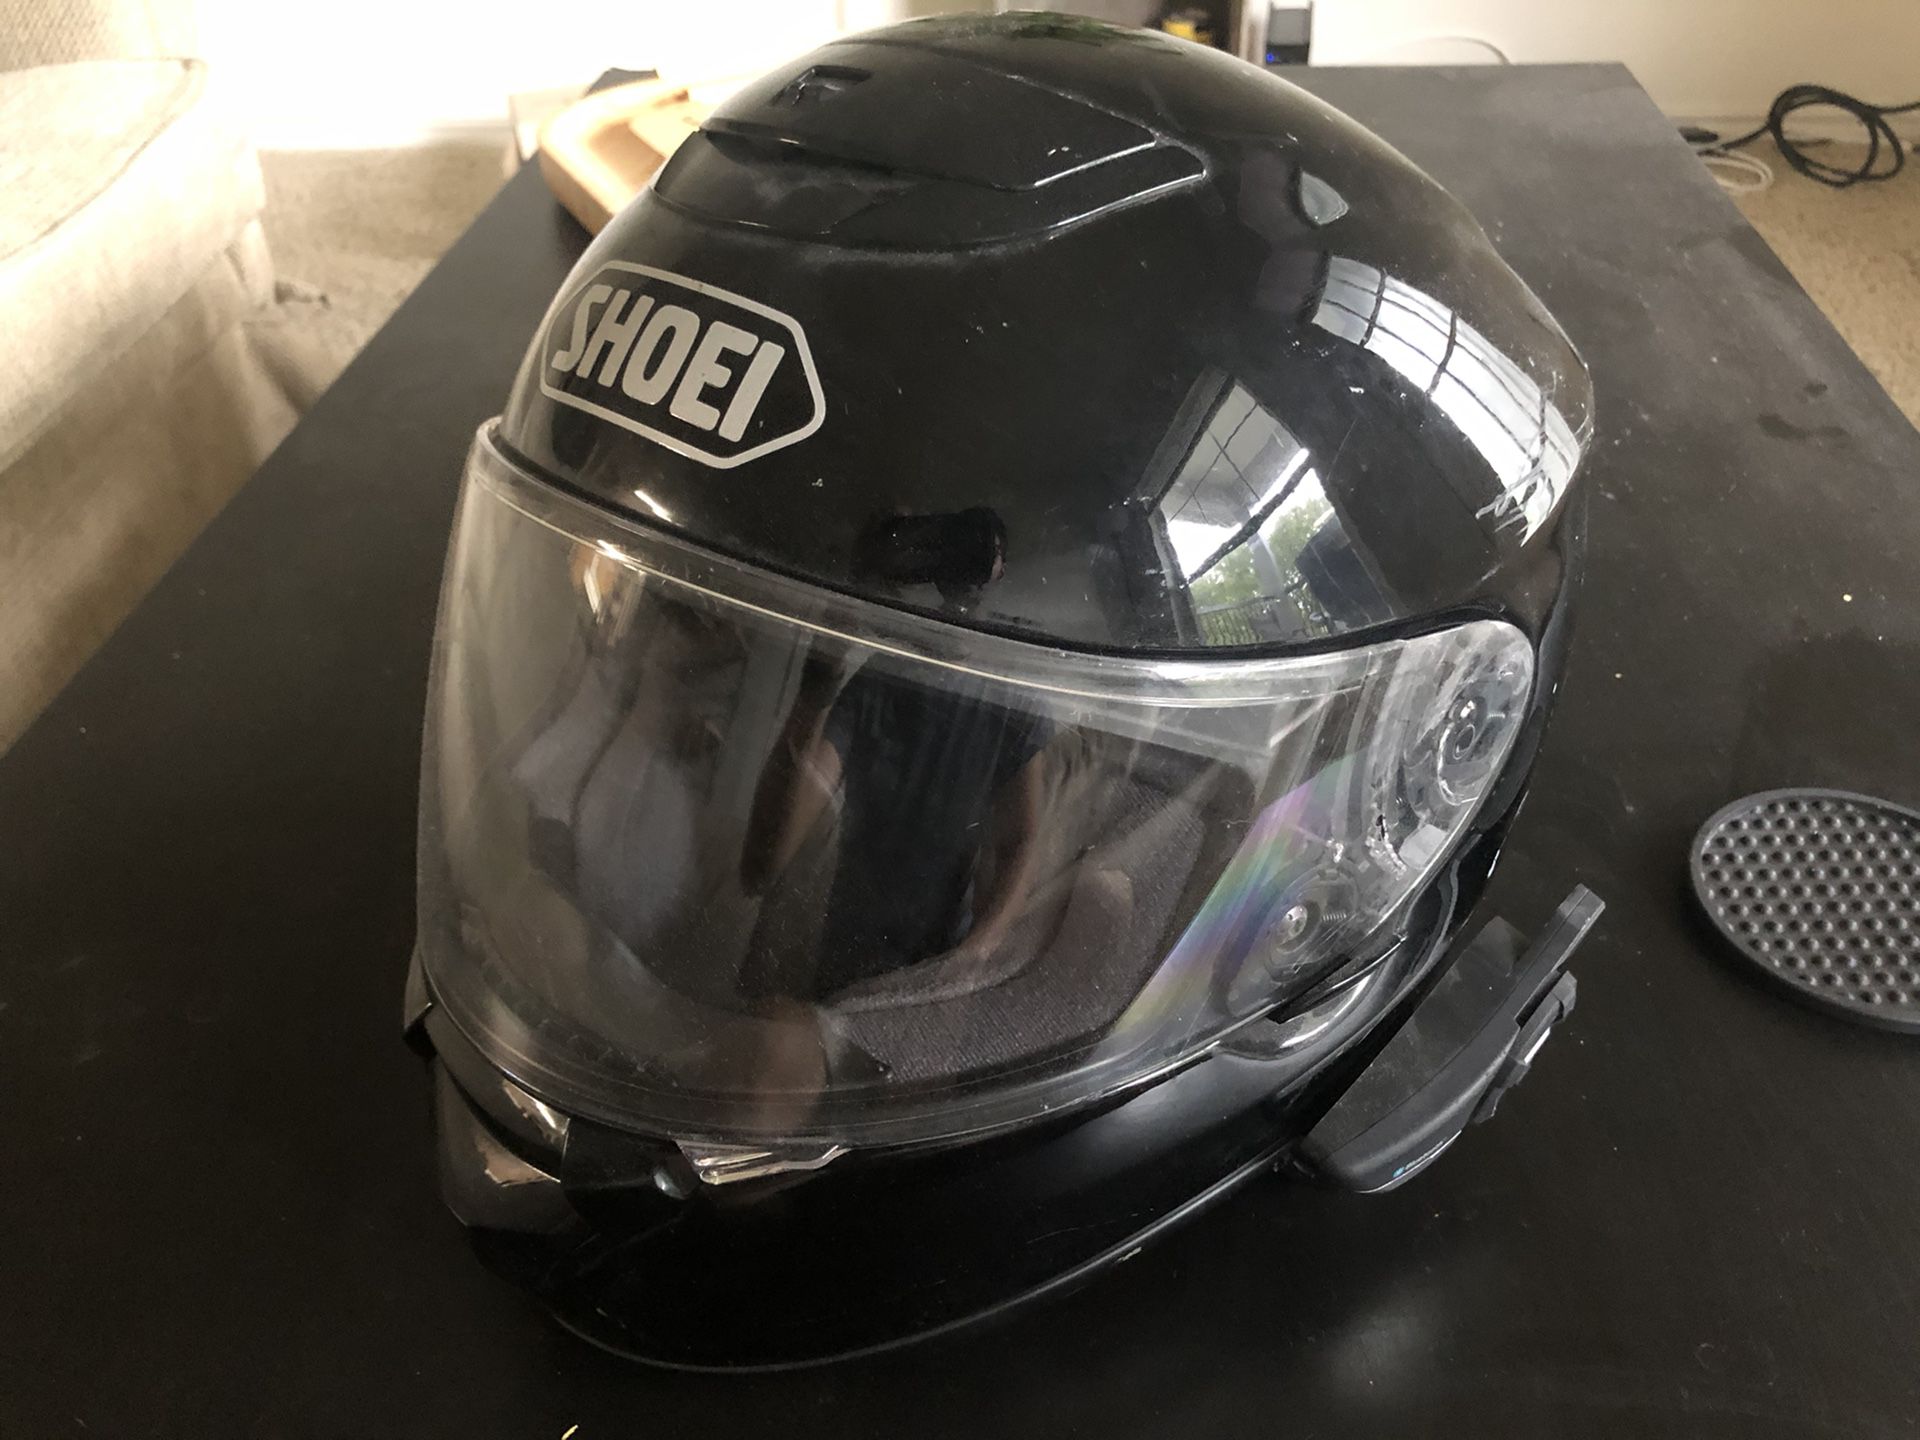 Shoei Snell Approved Used Motorcycle Helmet - Medium